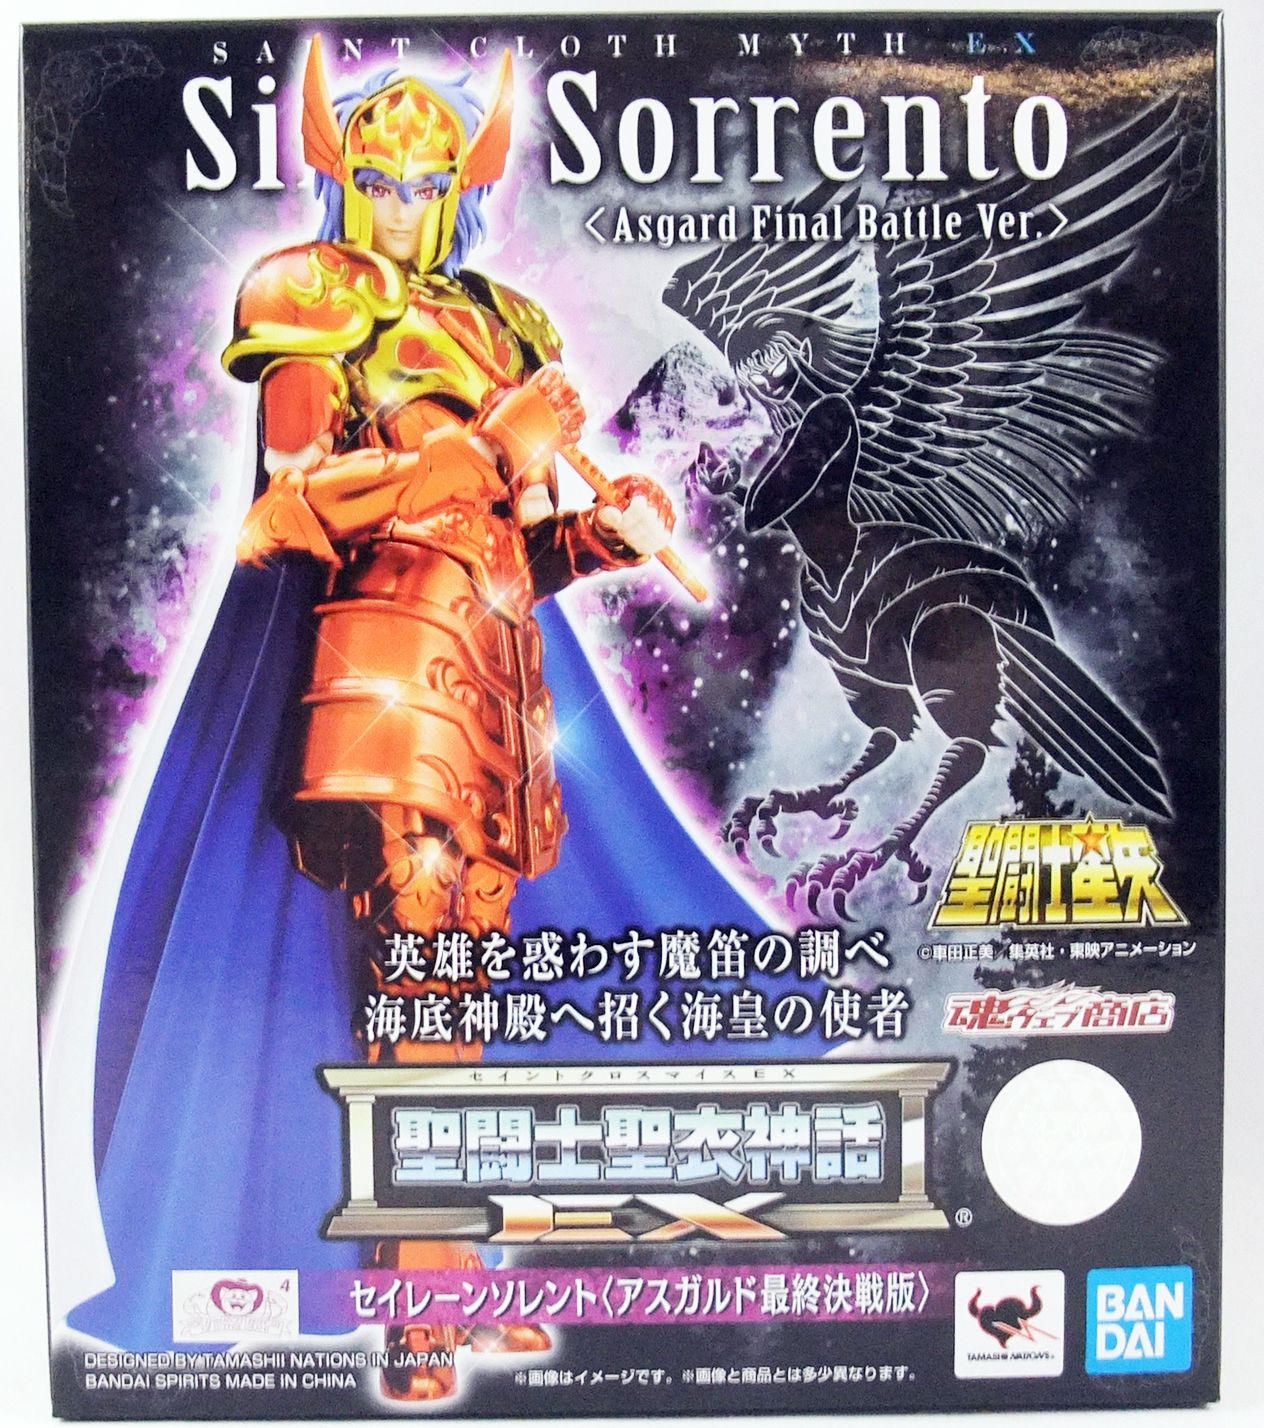 Saint Cloth Myth EX Siren Sorrento Asgard Final Battle Version Bandai Preorder 1